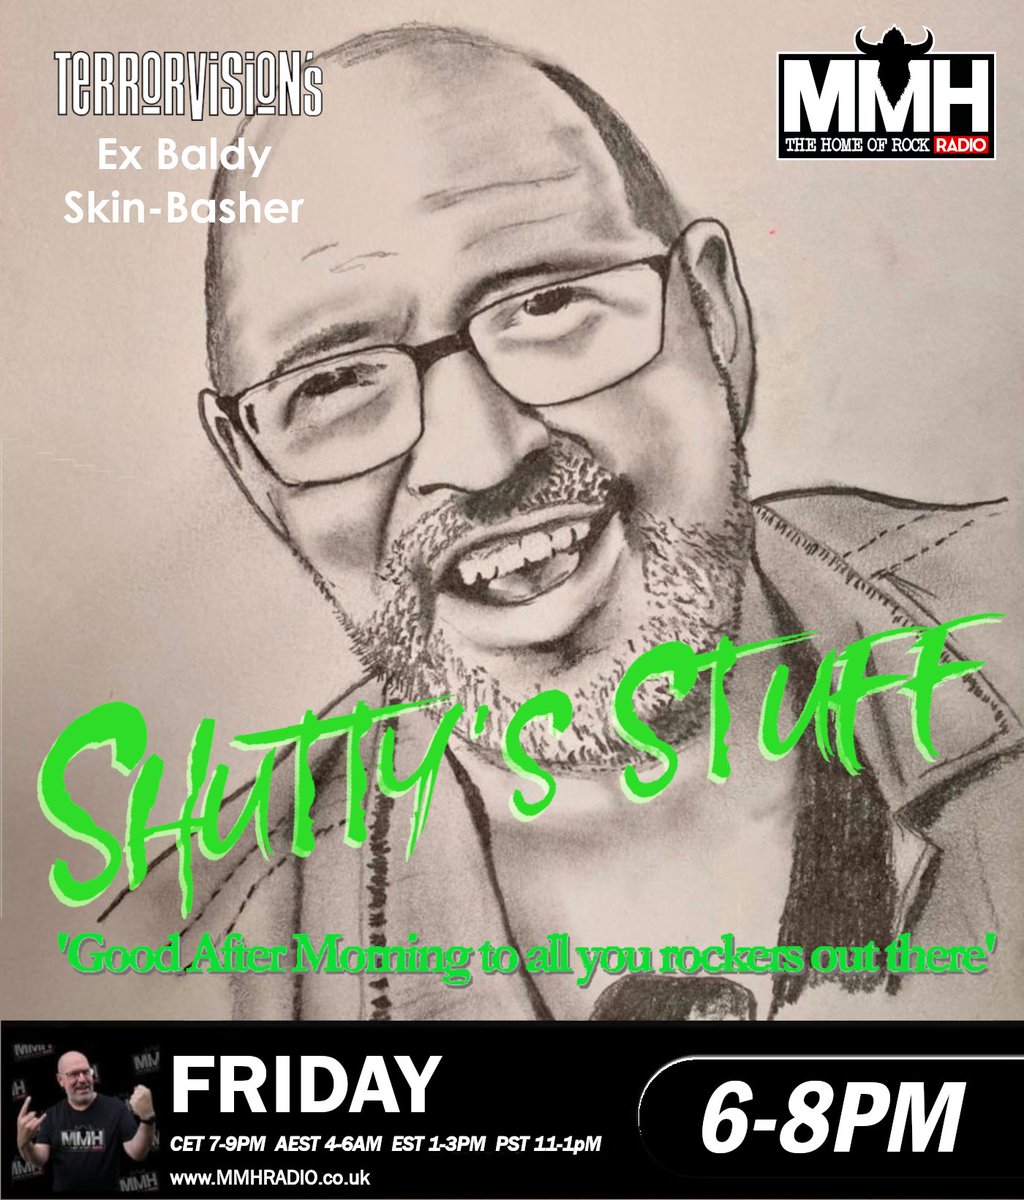 Shutty's Stuff is tomorrow!  Fridays 6-8pm on @MMH_Radio 
Last week's show: mmhradio.podbean.com/e/shutty-s-stu…

Email: ShuttyStuff@mmhradio.co.uk

@alterbridge 
@Skindredmusic 
@TheBlackout 
@Pendulum  
@acdc
@volbeat

#ShuttysStuff #Terrorvision #mmhradio